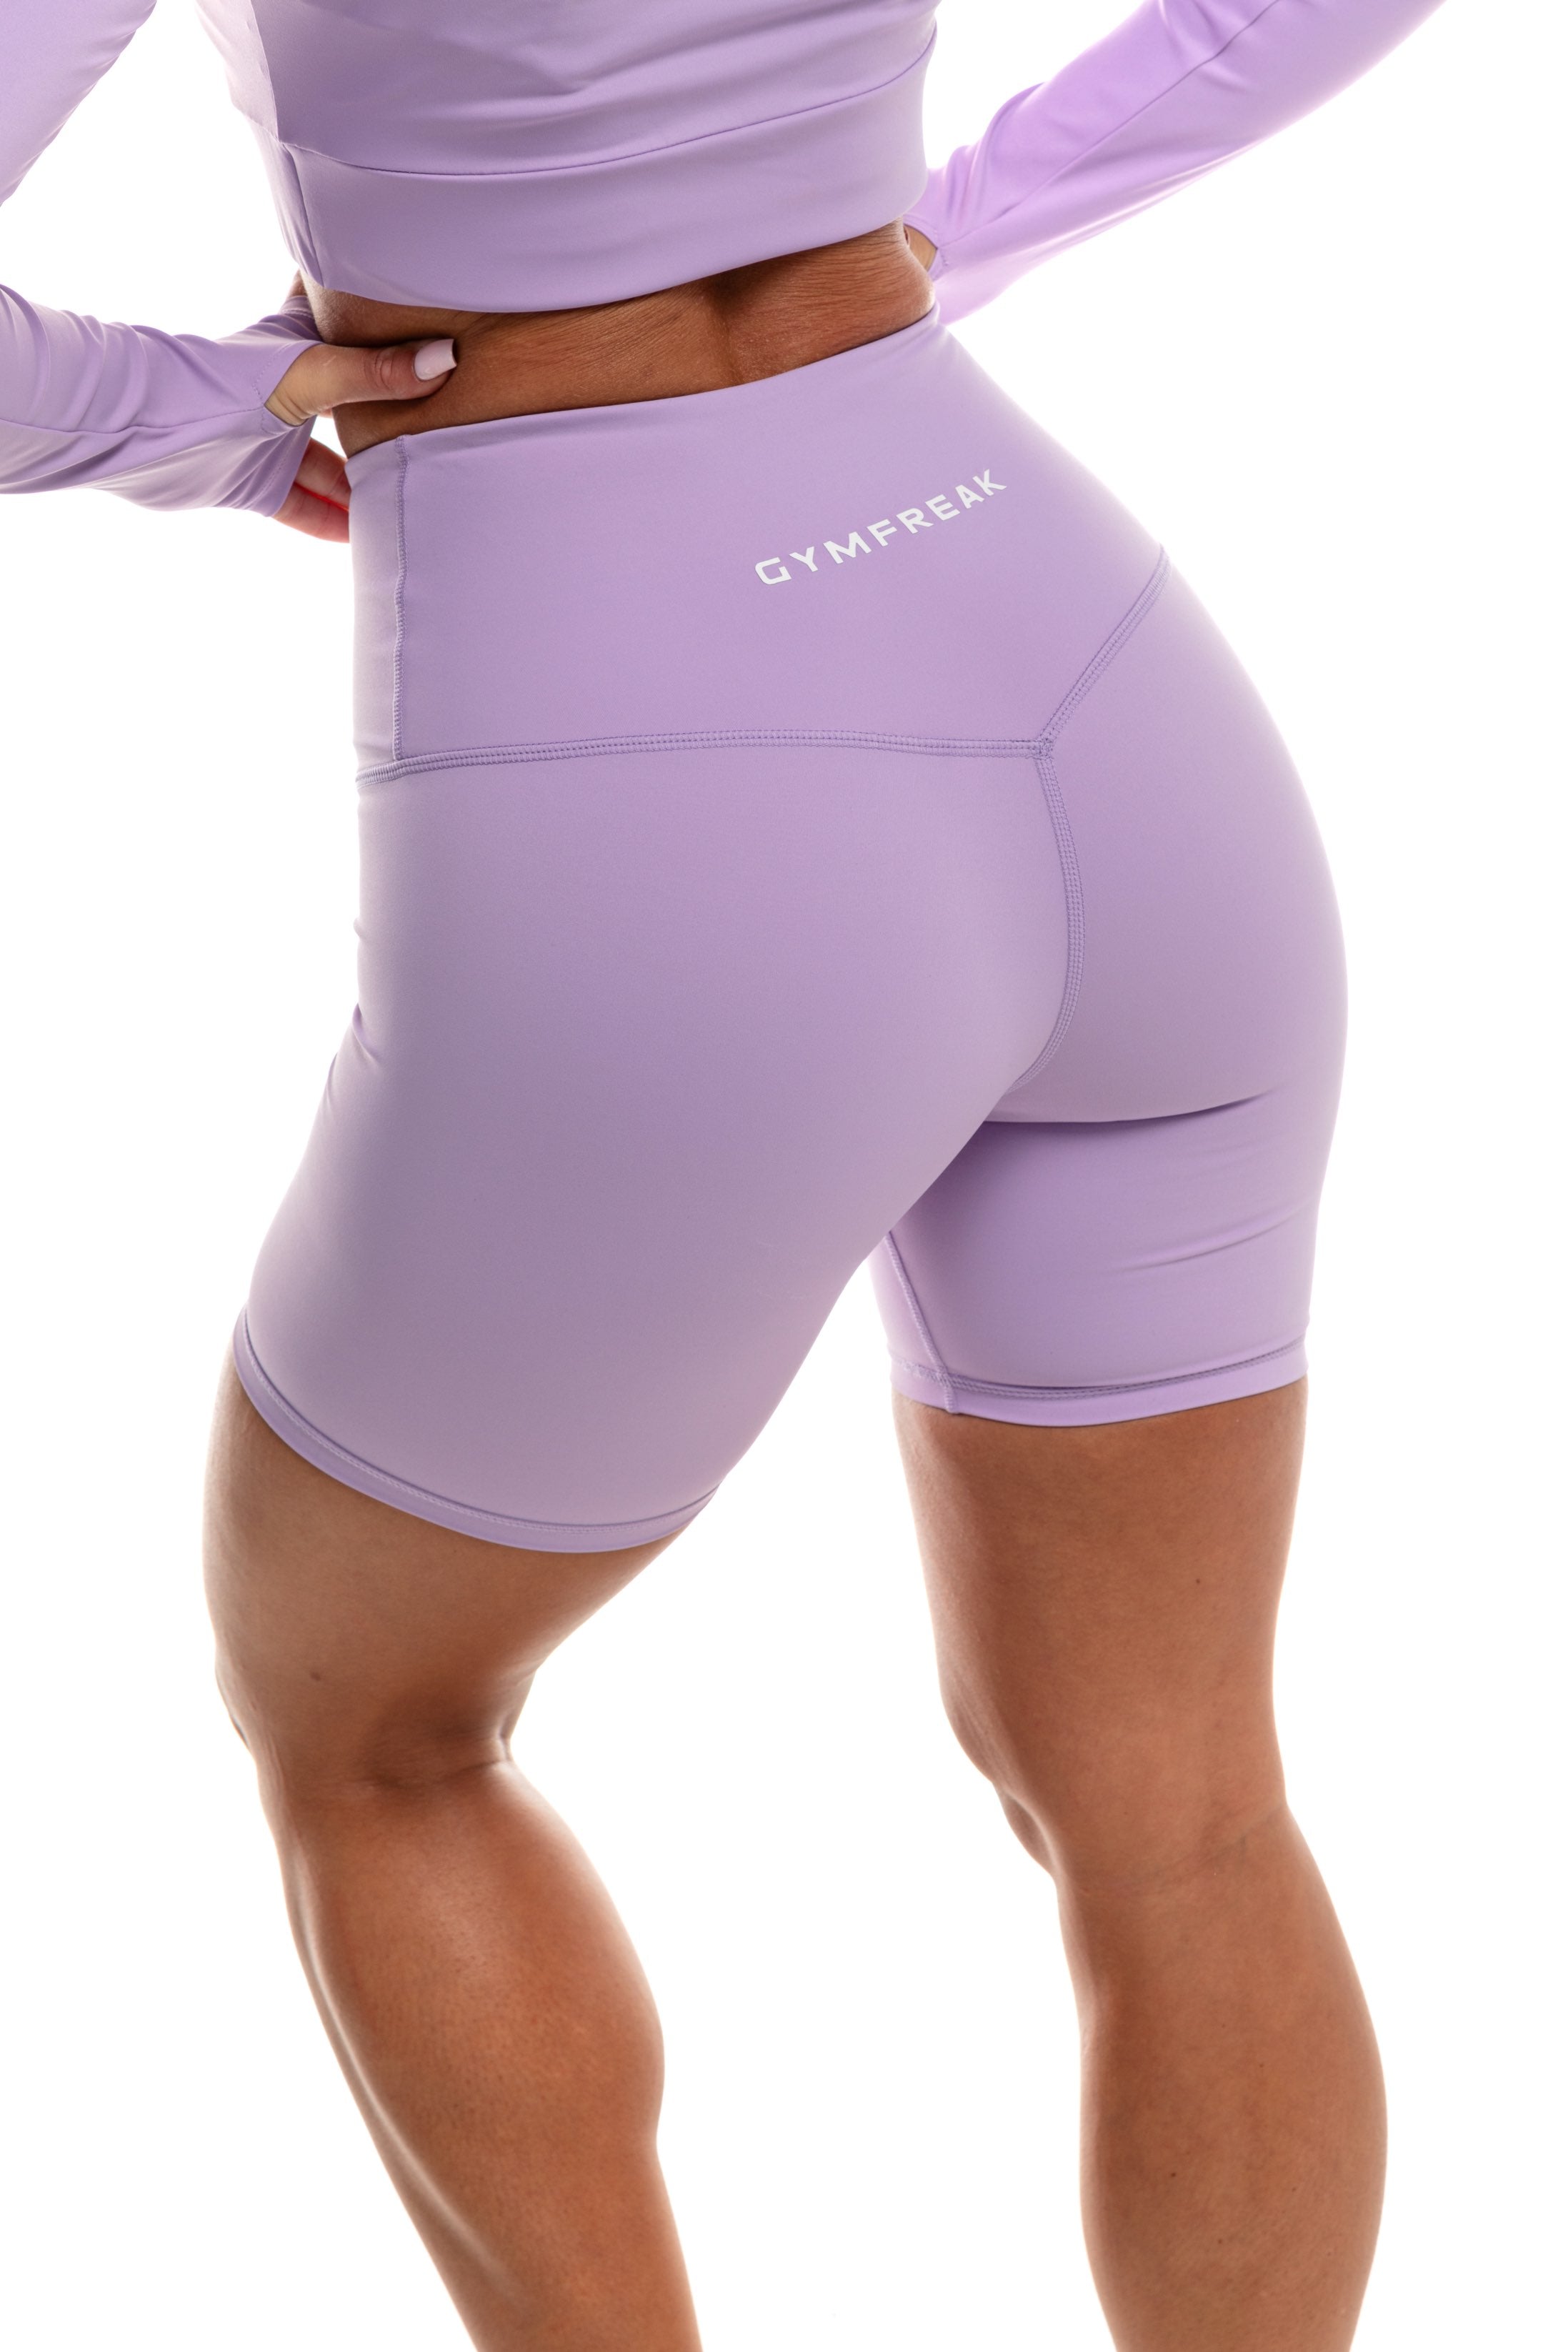 GymFreak Women's Vision Shorts - 6 inch Purple